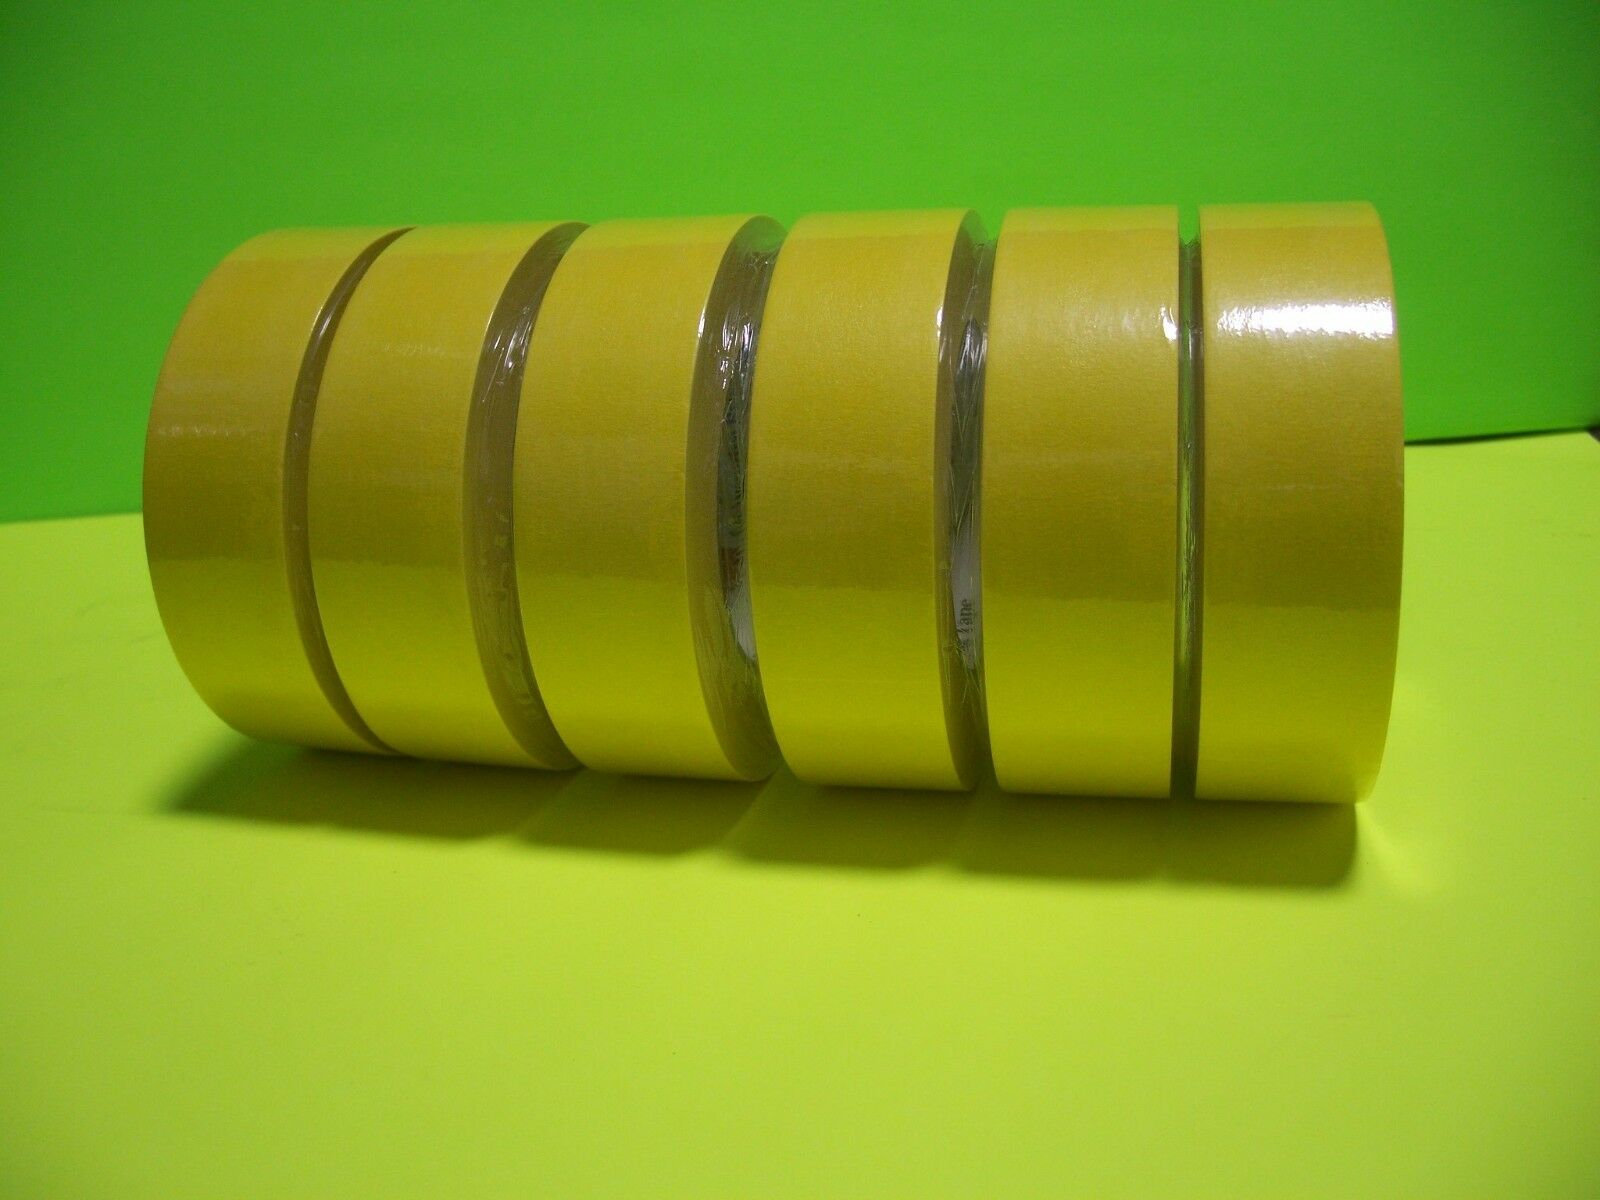 3m Yellow 6654 1-1/2" Masking Tape 6 Rolls 1 Sleeve 1.5" 06654